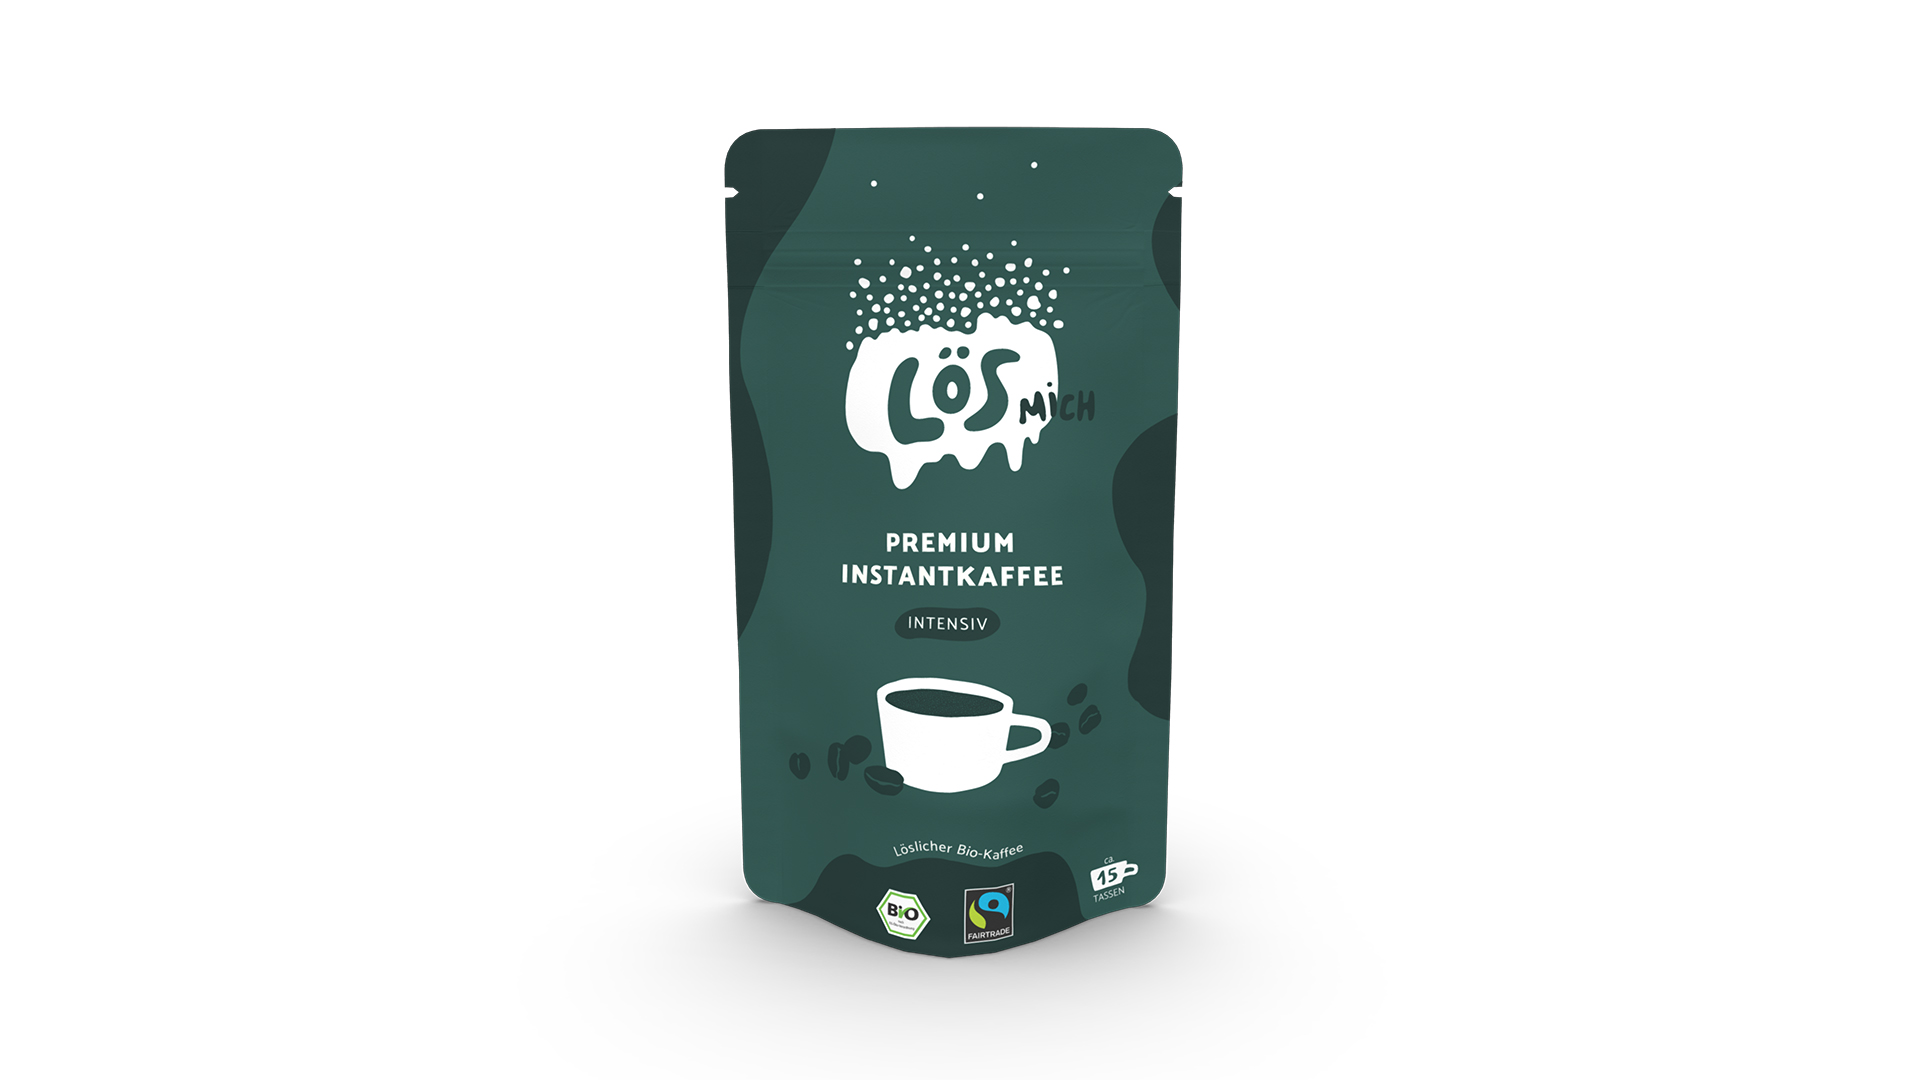 Premium Instantkaffee Intensiv bio FLO-Fairtrade 42g